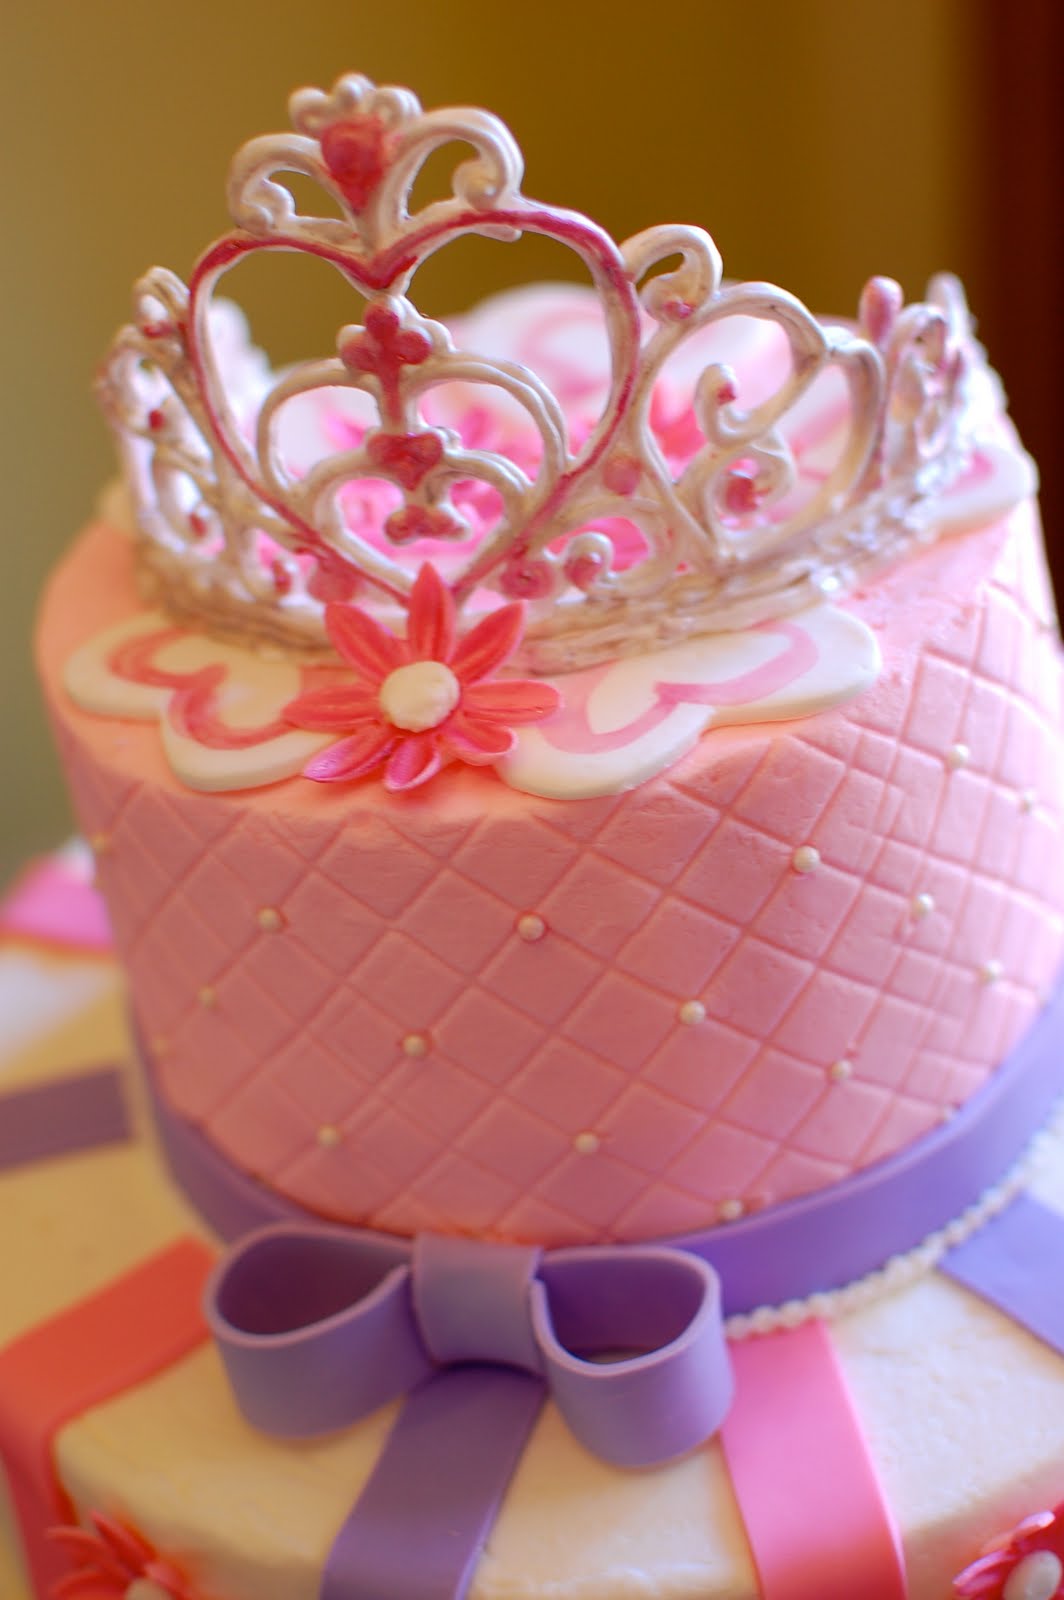 SugarSong Custom Cakes: A Pink Princess Cake